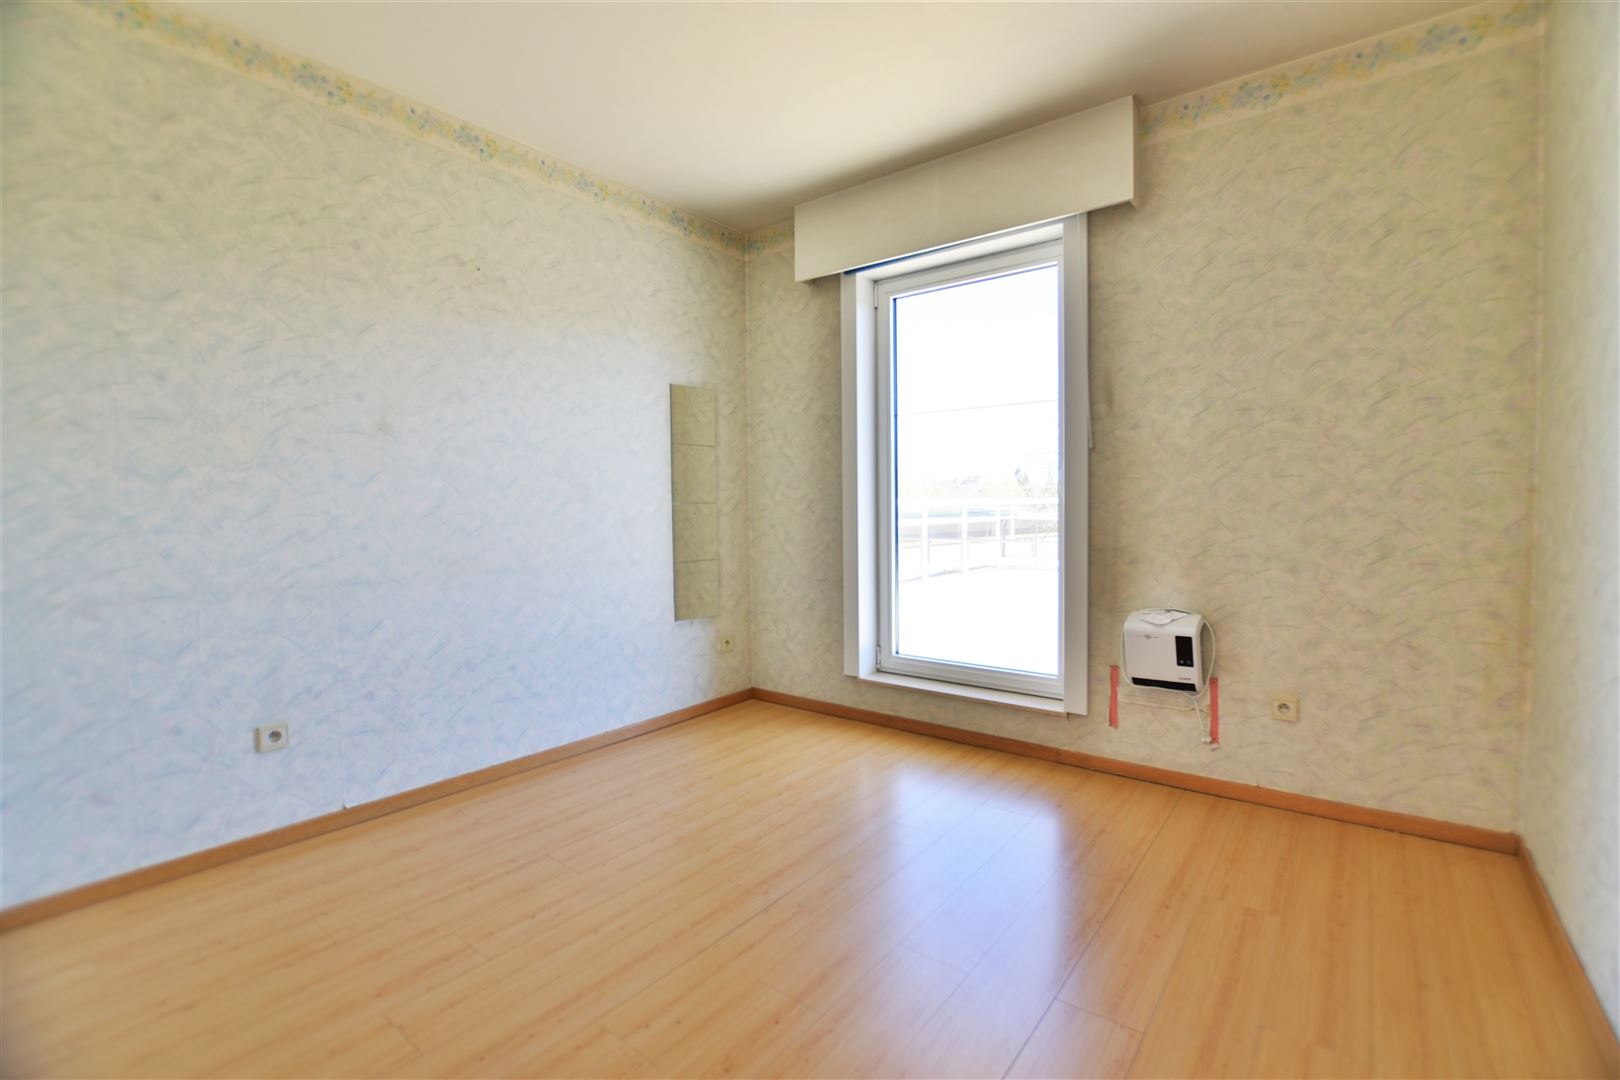 Foto 14 : Appartement te 9200 SINT-GILLIS-DENDERMONDE (België) - Prijs € 149.000